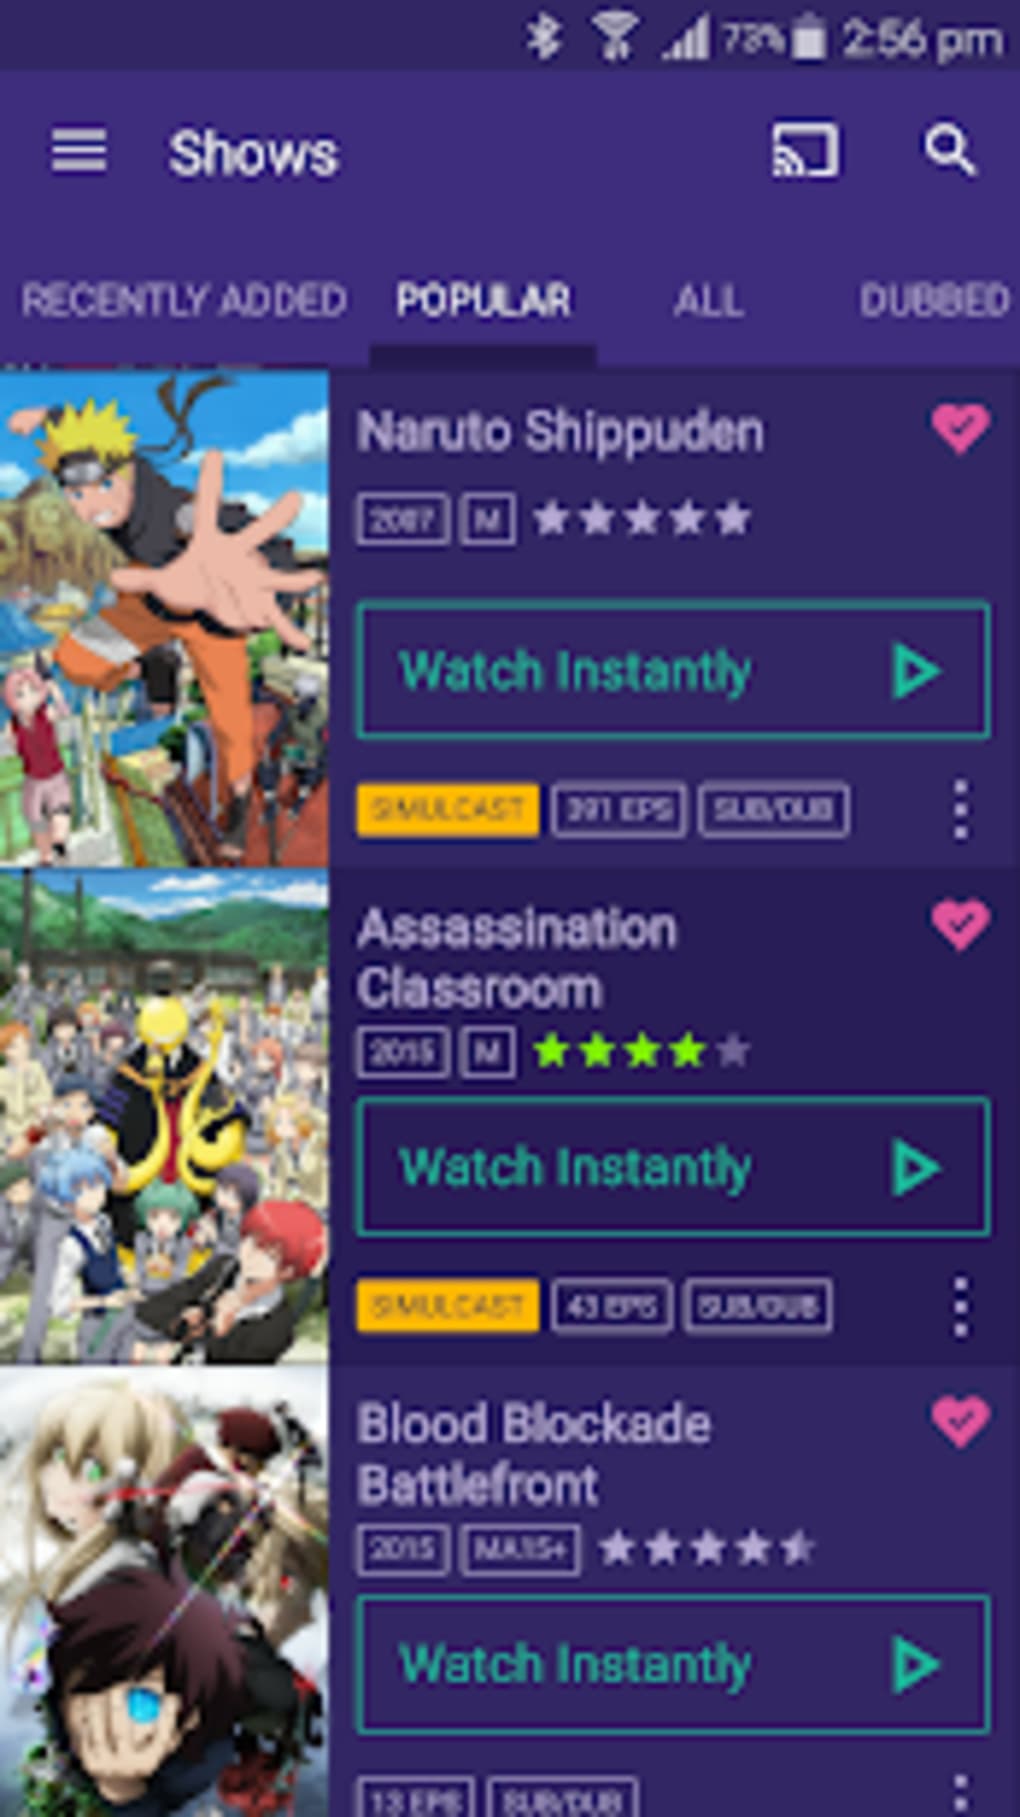 AnimeLab - Watch Anime Free – Apps bei Google Play